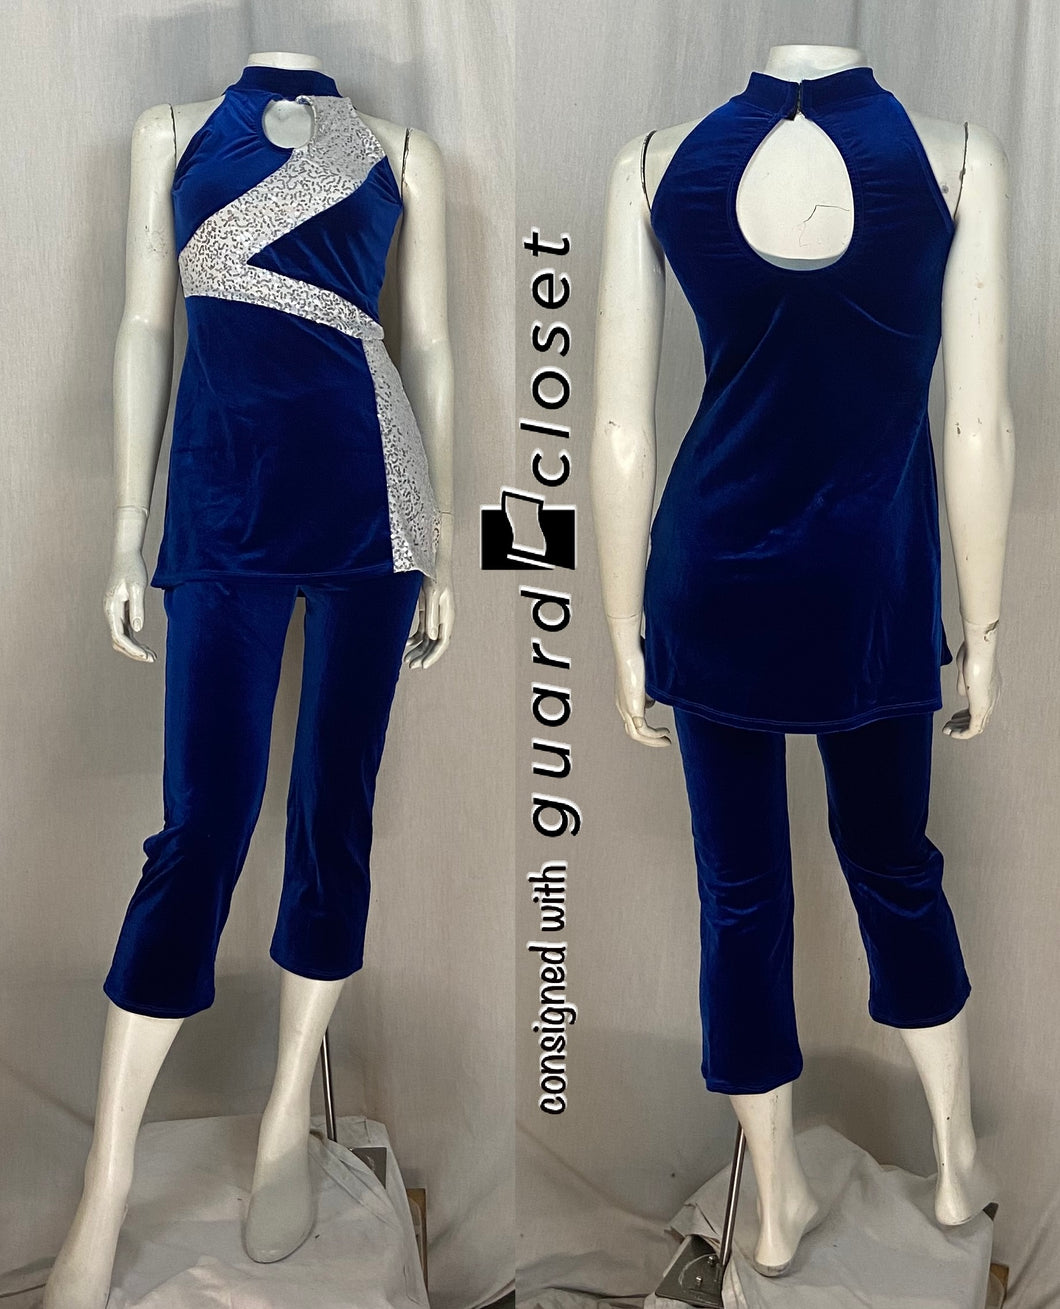 10 royal blue white sleeveless tops + 14 royal blue capri pants